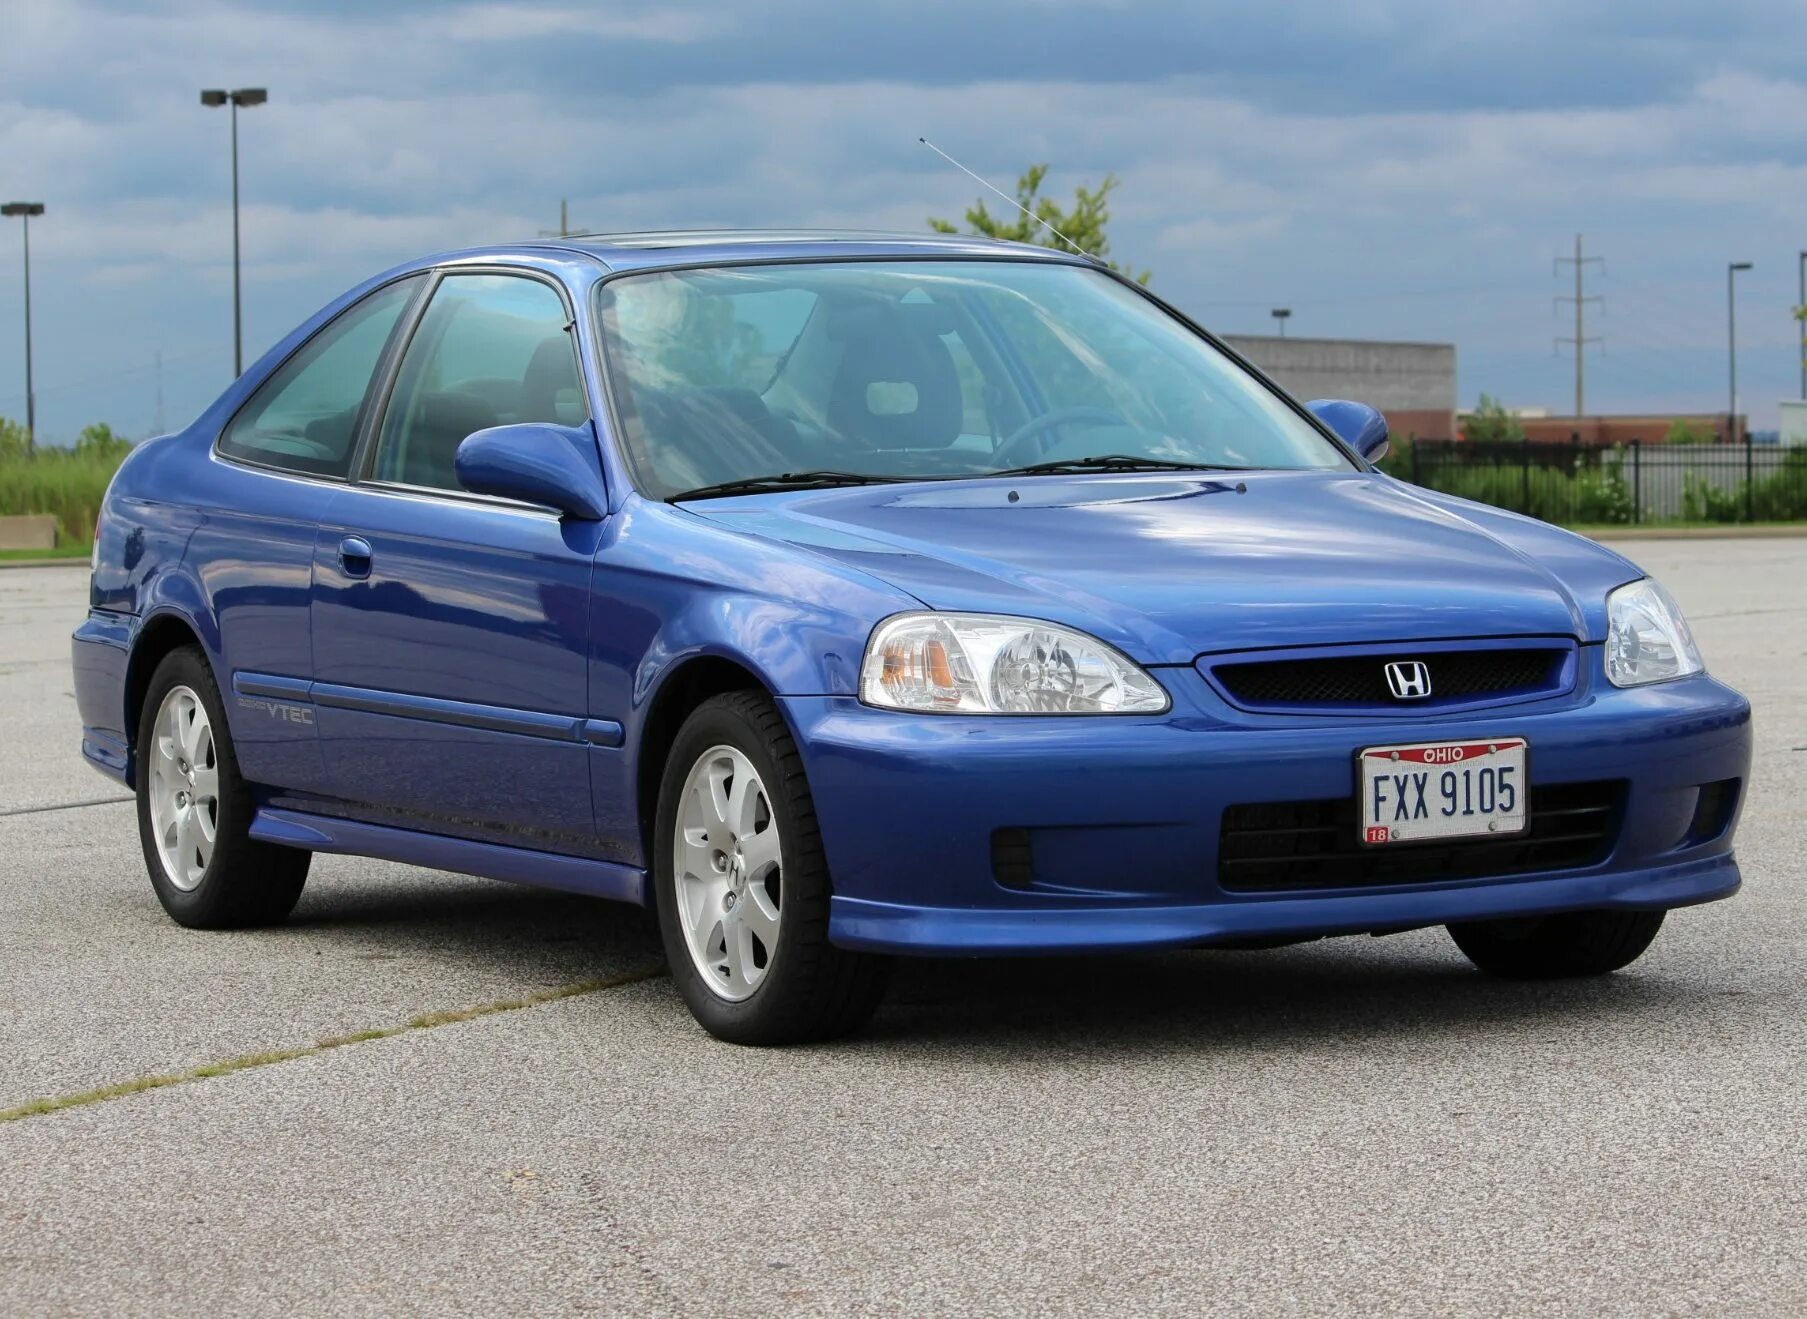 Honda Civic 1999. Хонда Цивик седан 1999. Honda Civic 1999 седан. Honda Civic si 1999. Honda civic 2000 года